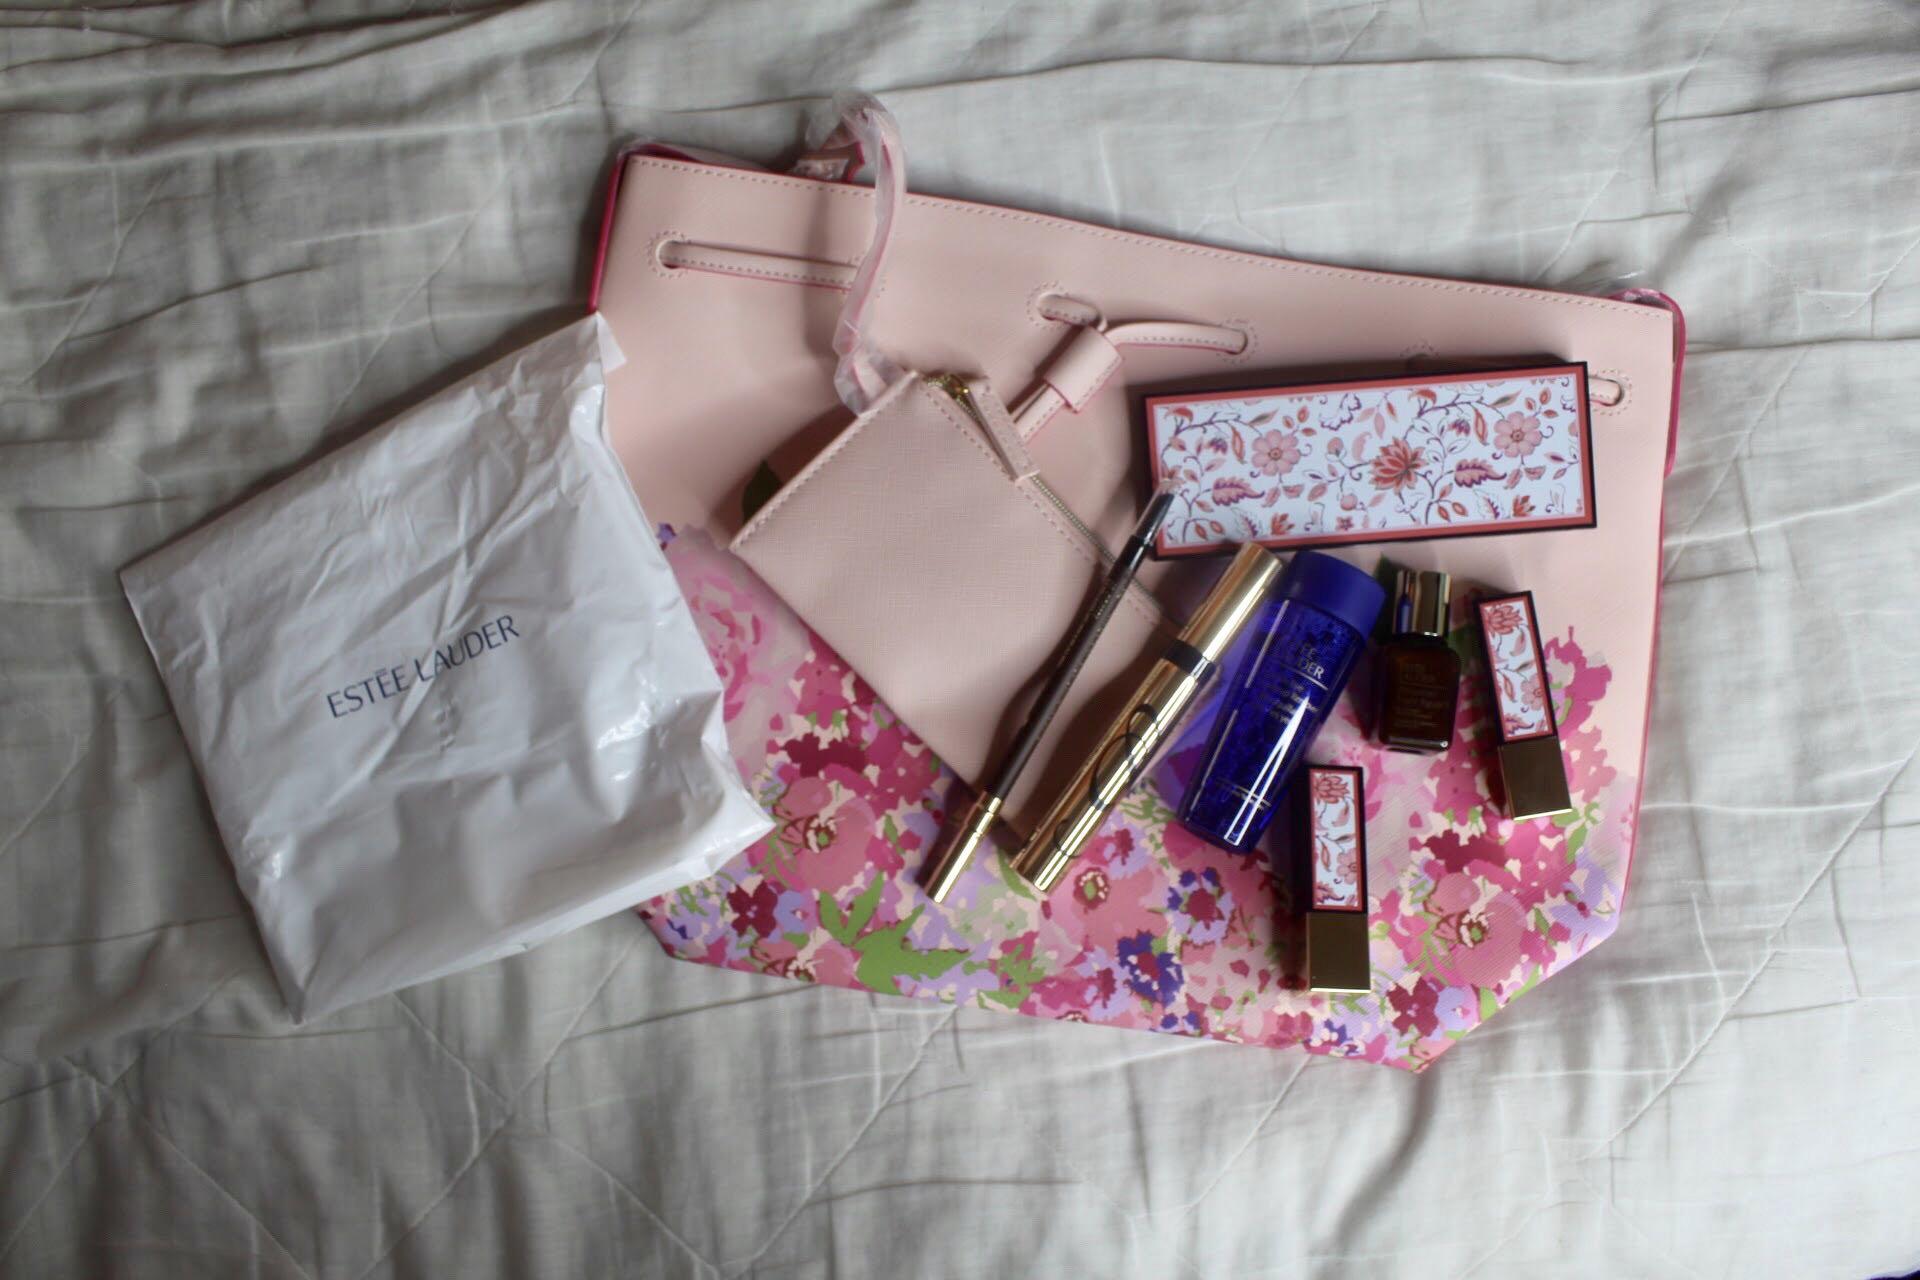 Victoria's Secret Wild Blooms body fragrances - The Perfume Girl